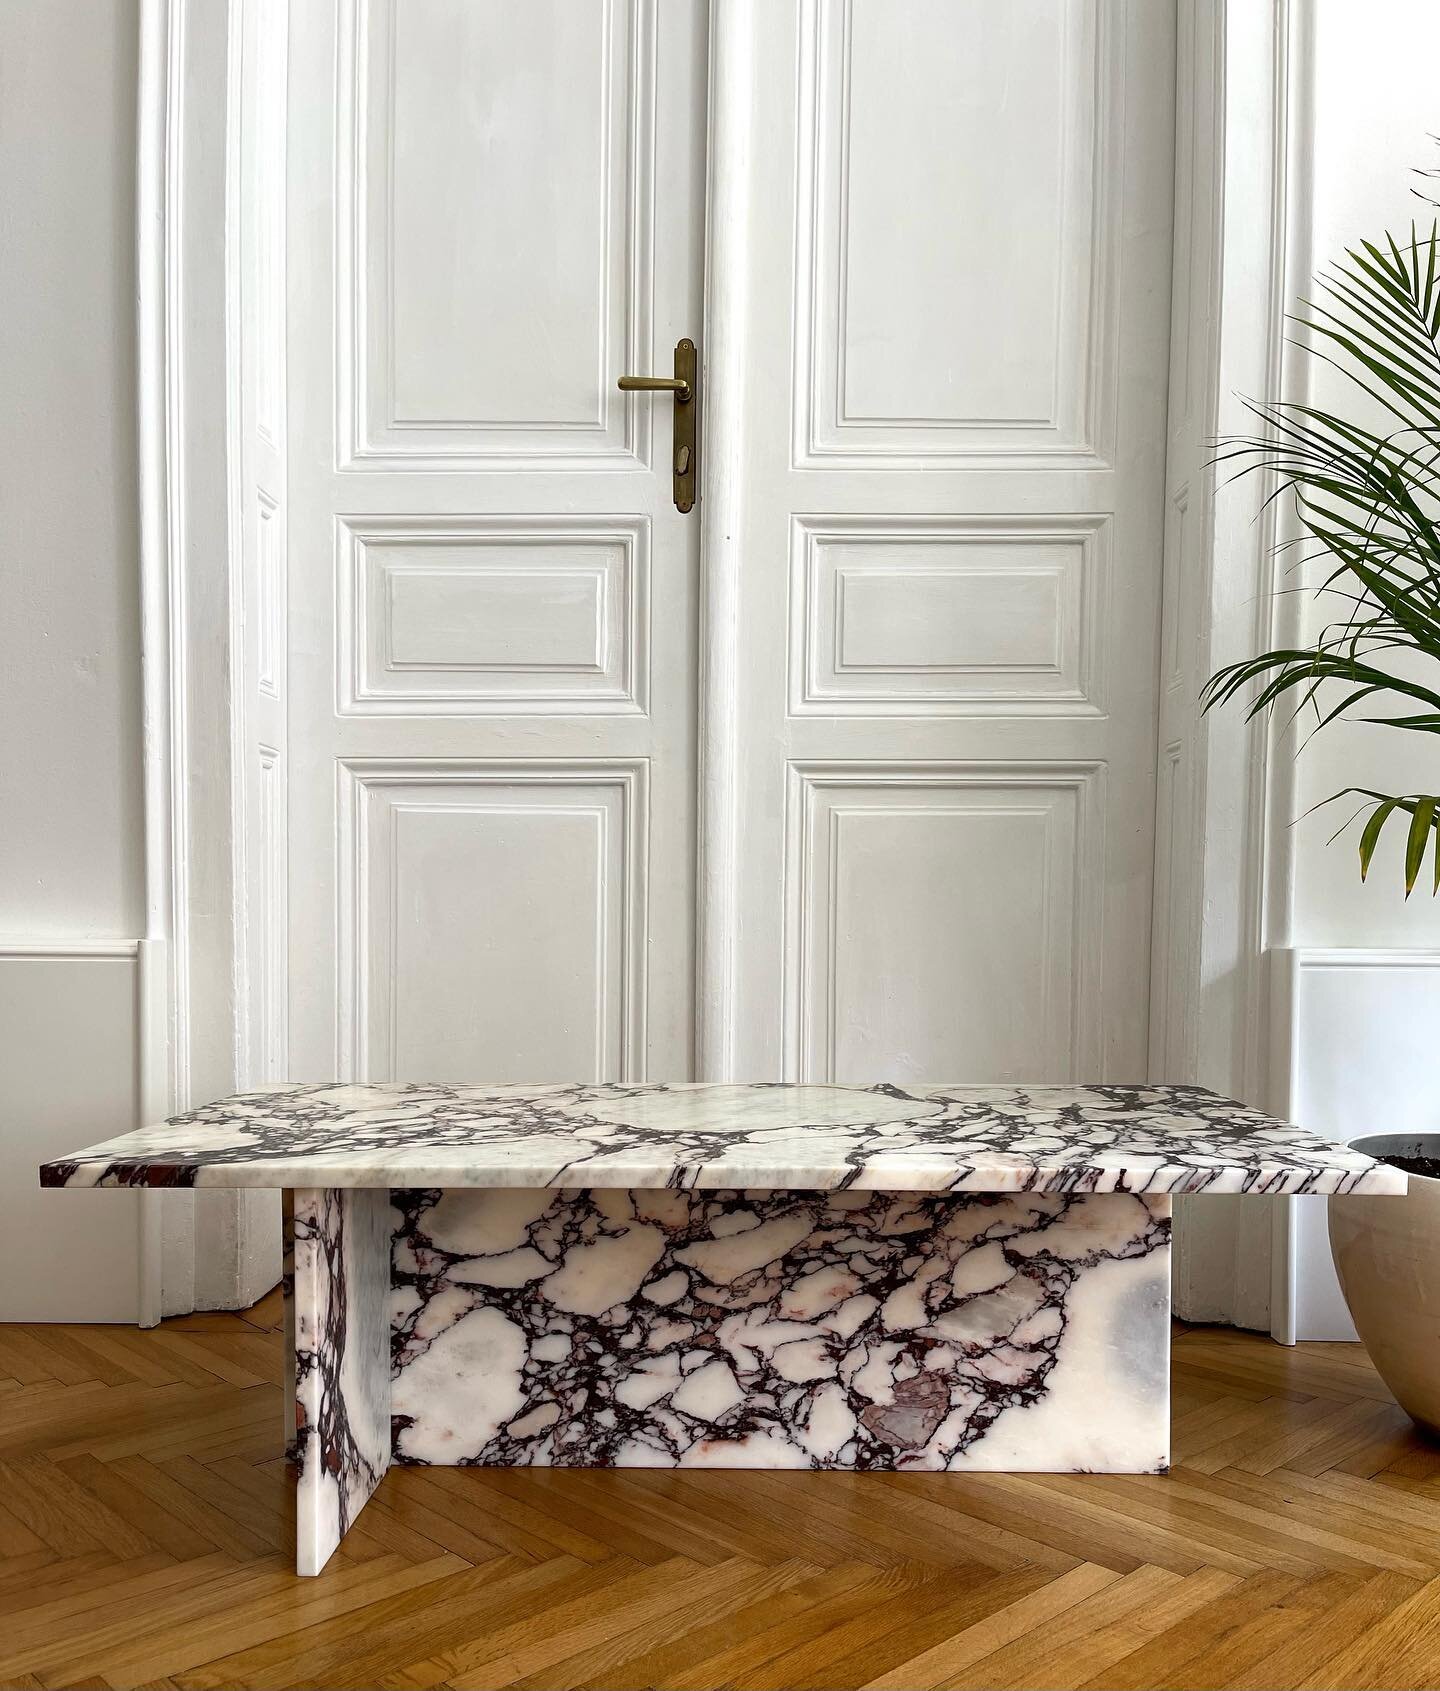 🤍 IRIS coffee table
Calacatta Viola marble (brushed)
size: 110x55x35cm
info: DM